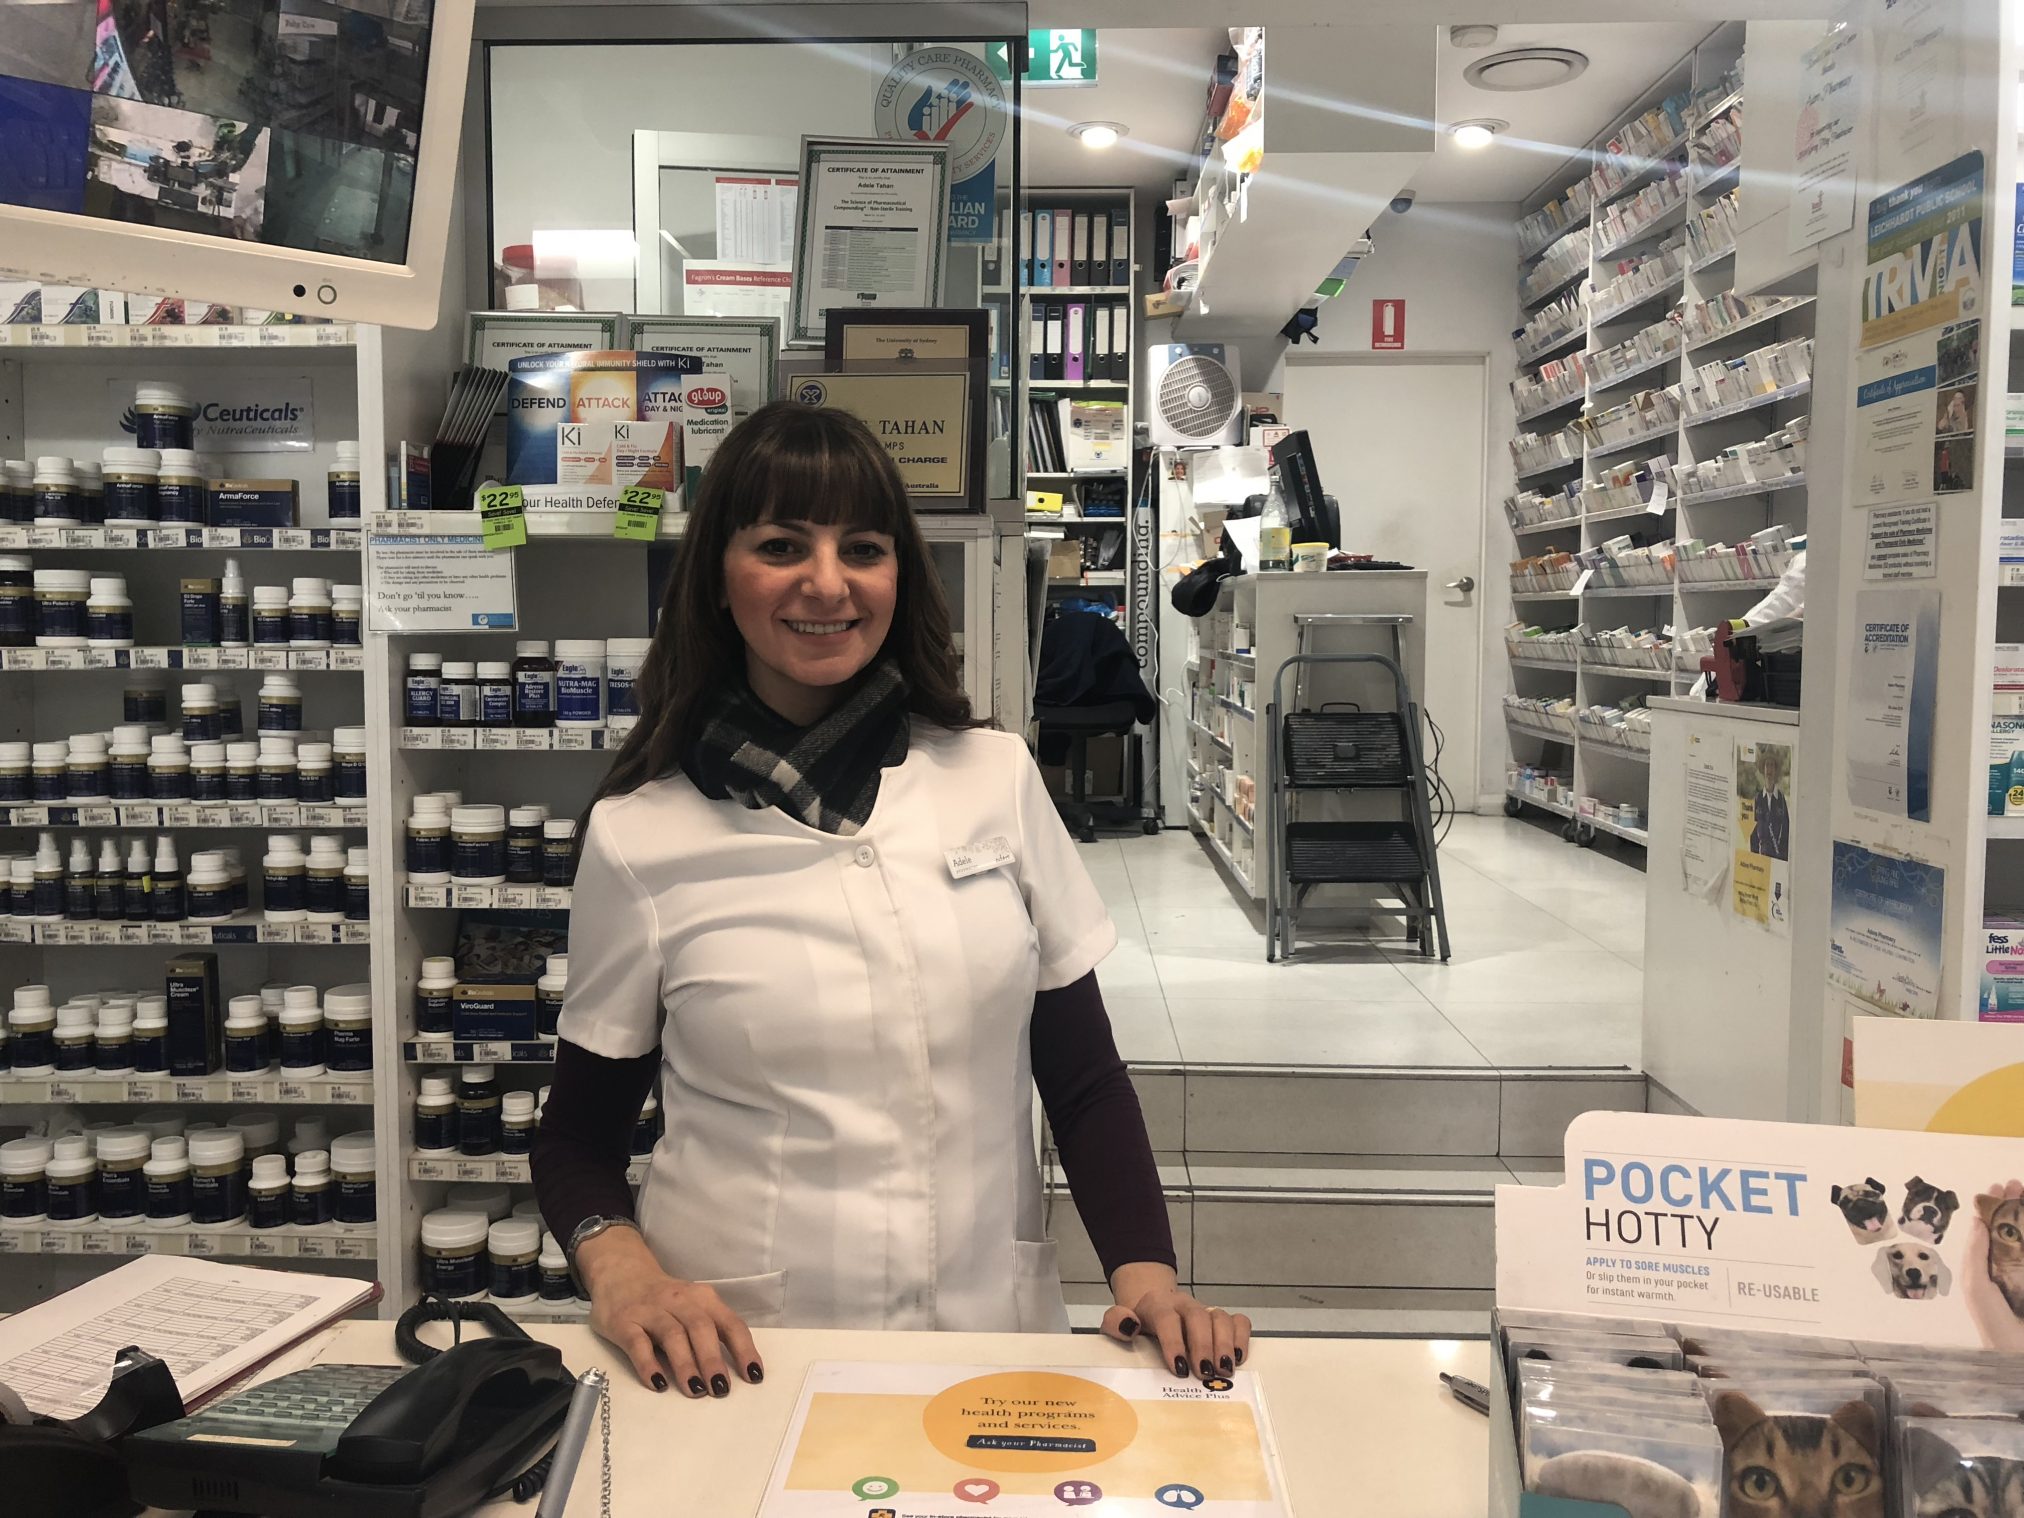 Adele Tahan at her pharmacy. Photo credit: AJP